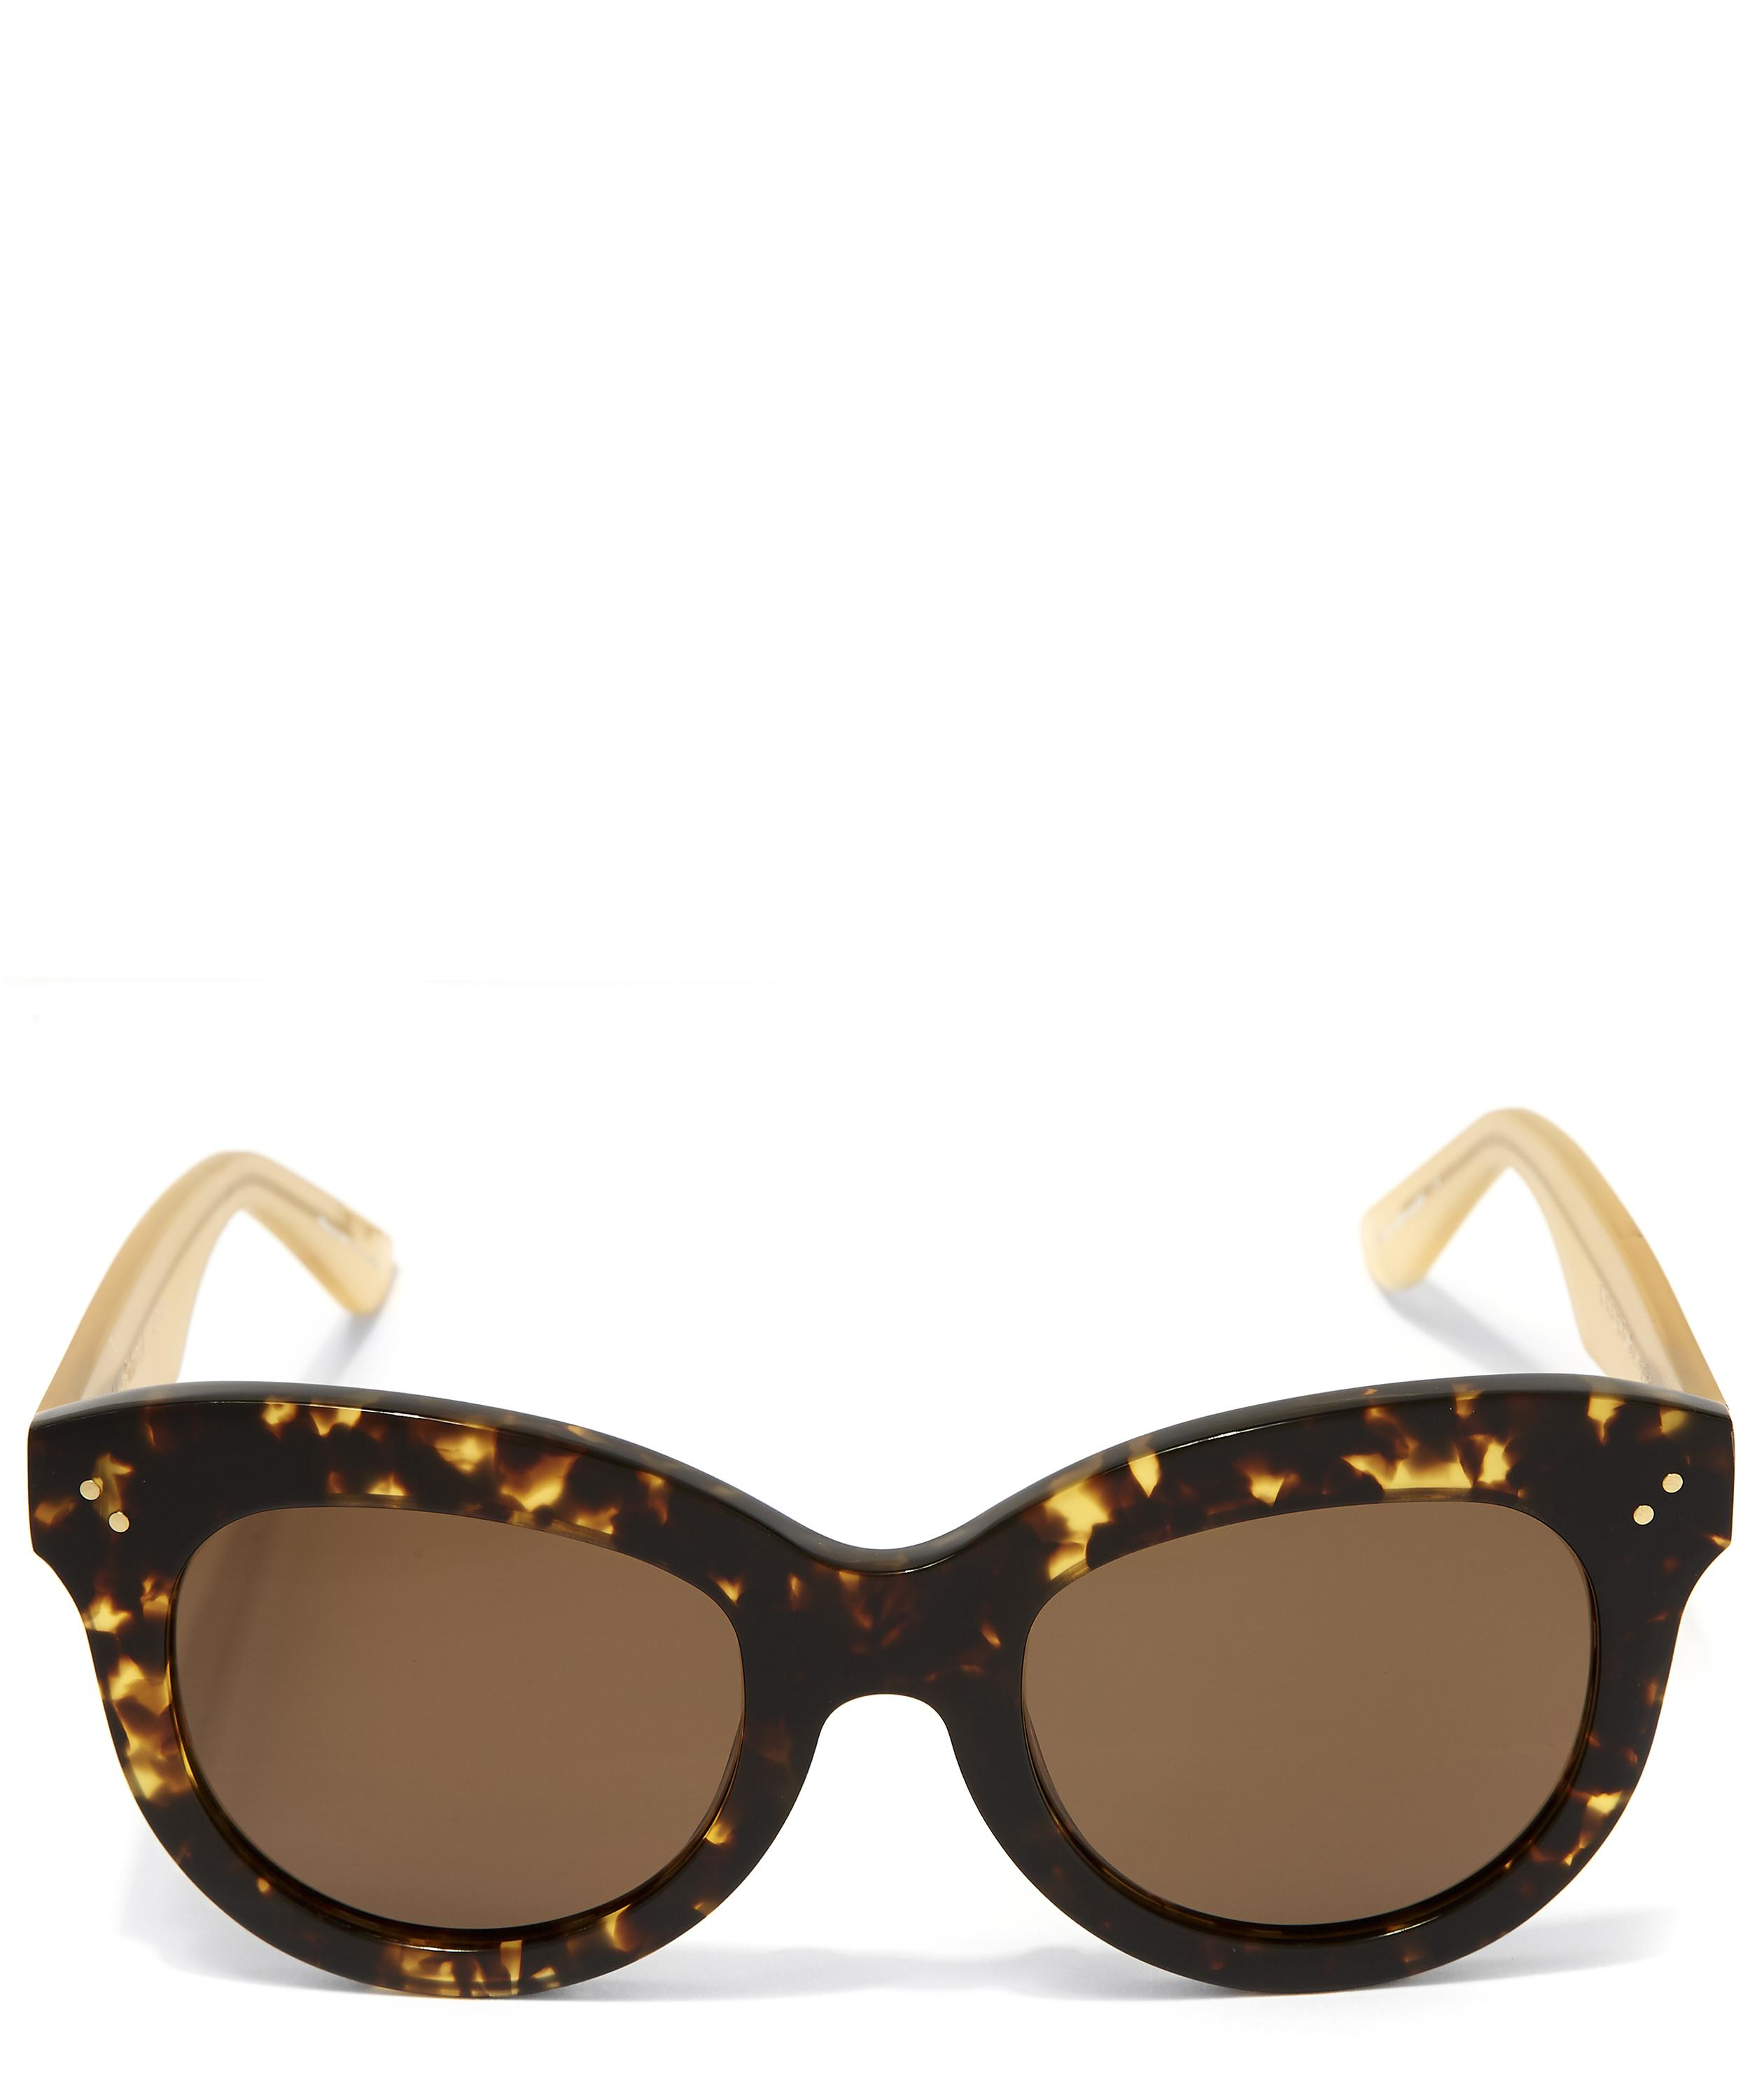 Lyst - Krewe Sunglasses Julia Sunglasses in Brown